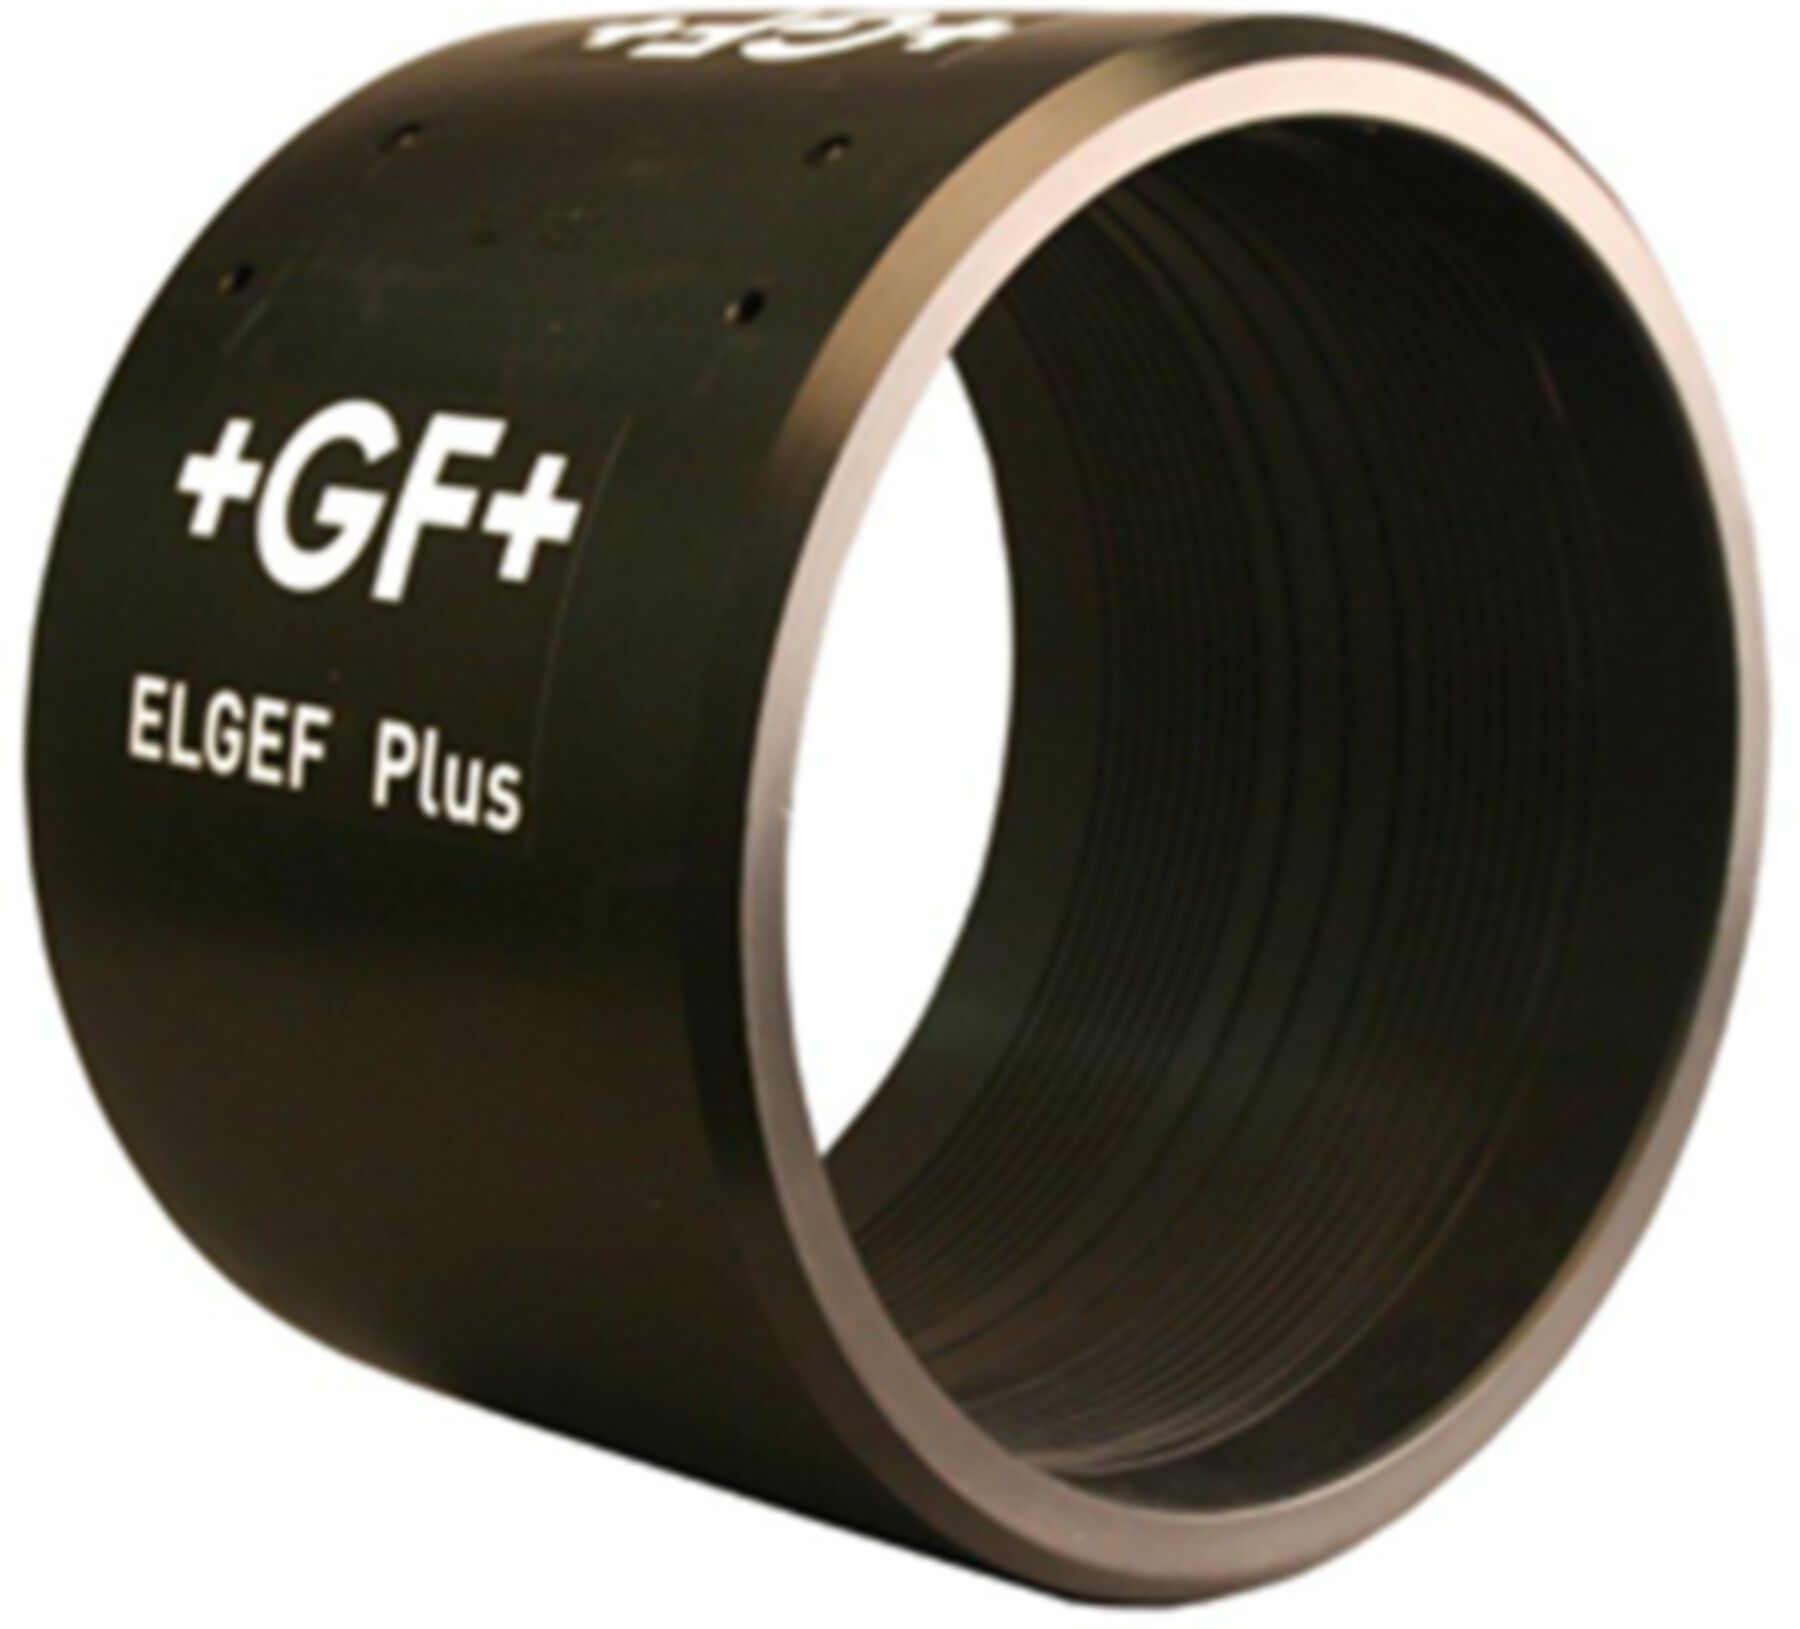 ELGEF Muffe PN 16 d 225mm 753 911 620 - ELGEF Plus Elektroschweissfittinge